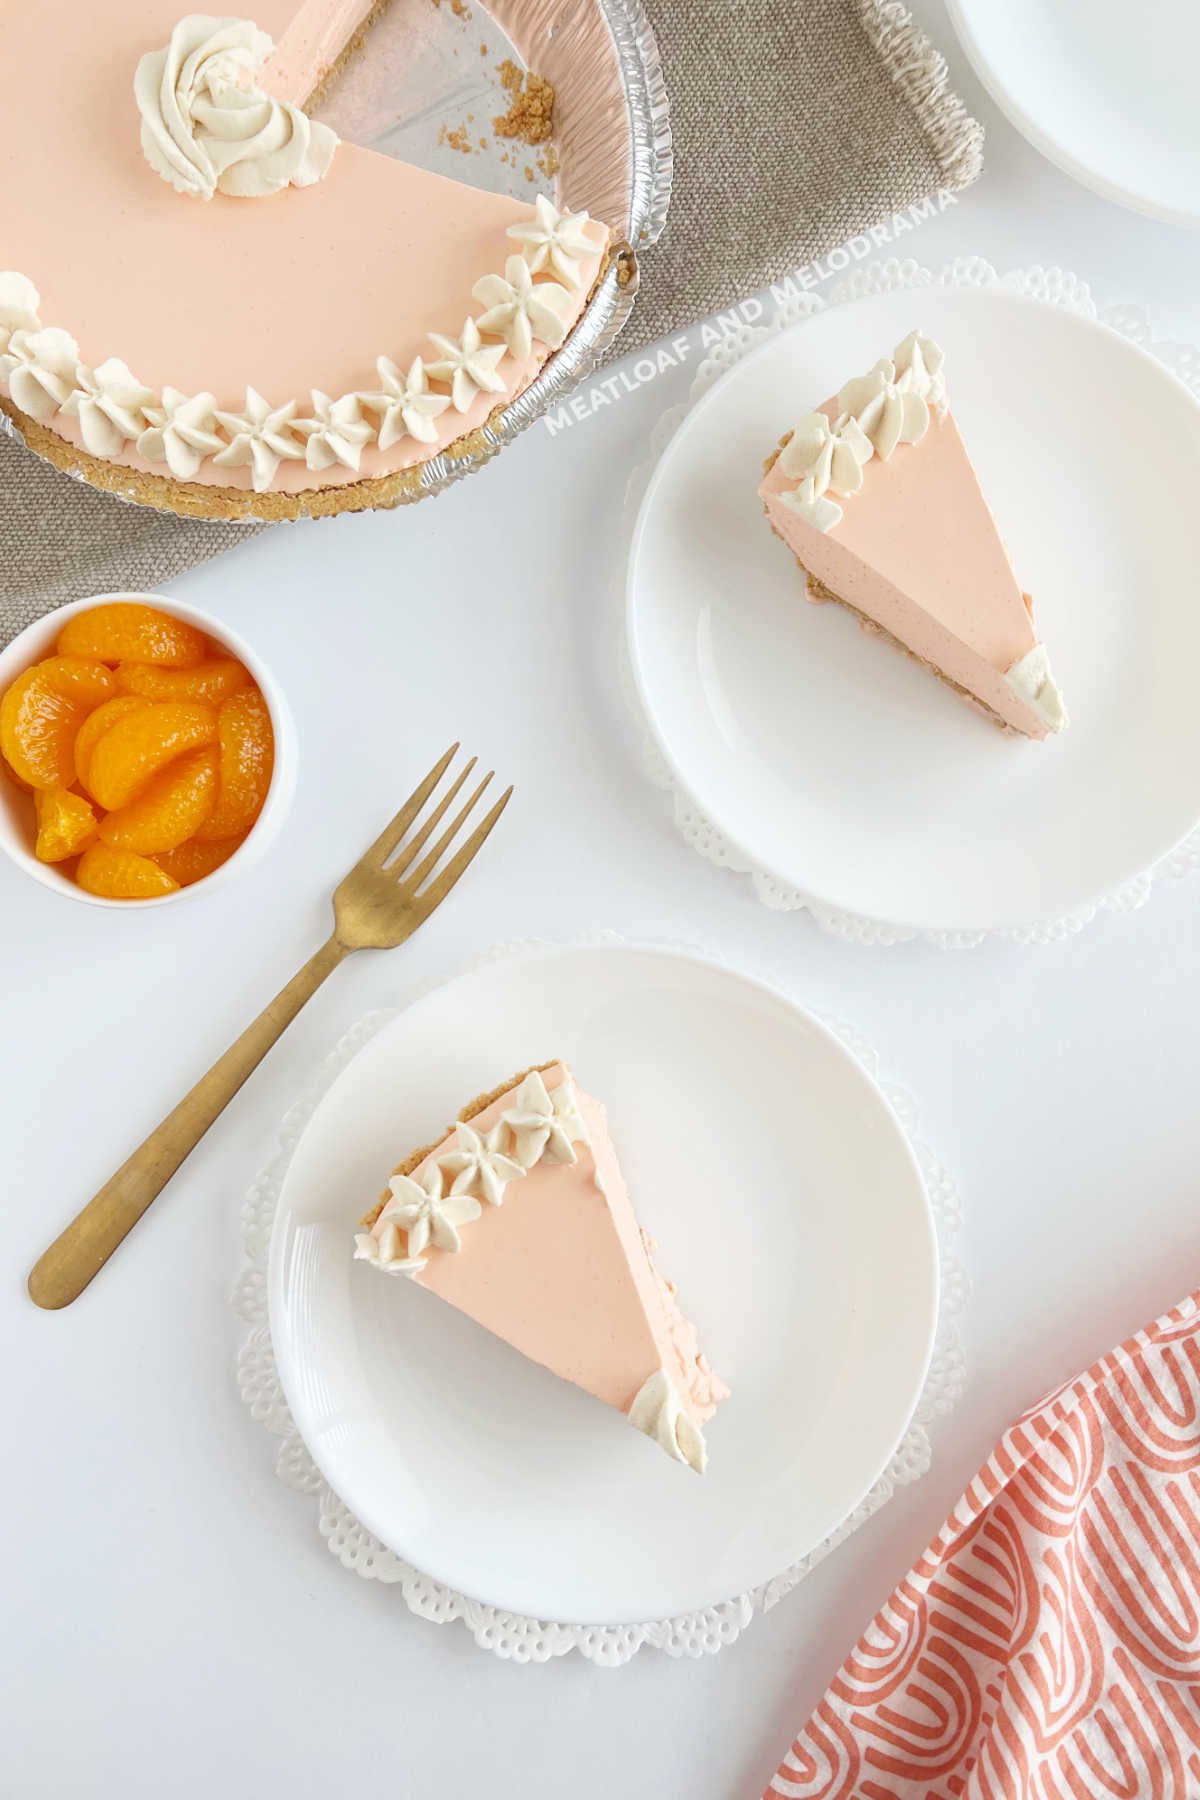 jello creamsicle πίτα με σαντιγί και πορτοκάλια μανταρινιού στο τραπέζι